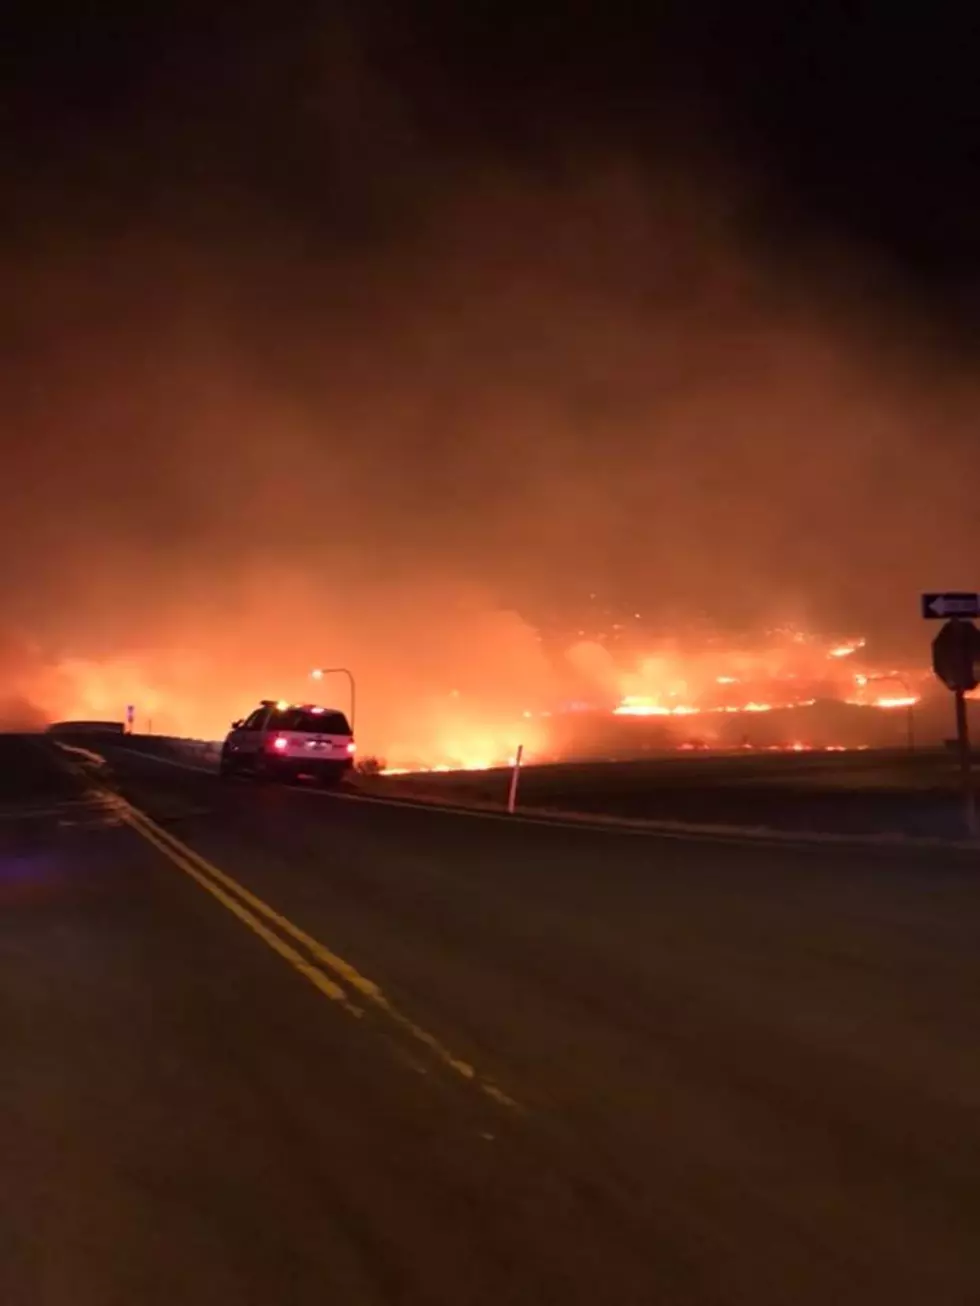 Growing Wildfire Causes Evacuation of Vantage, Closes I-90